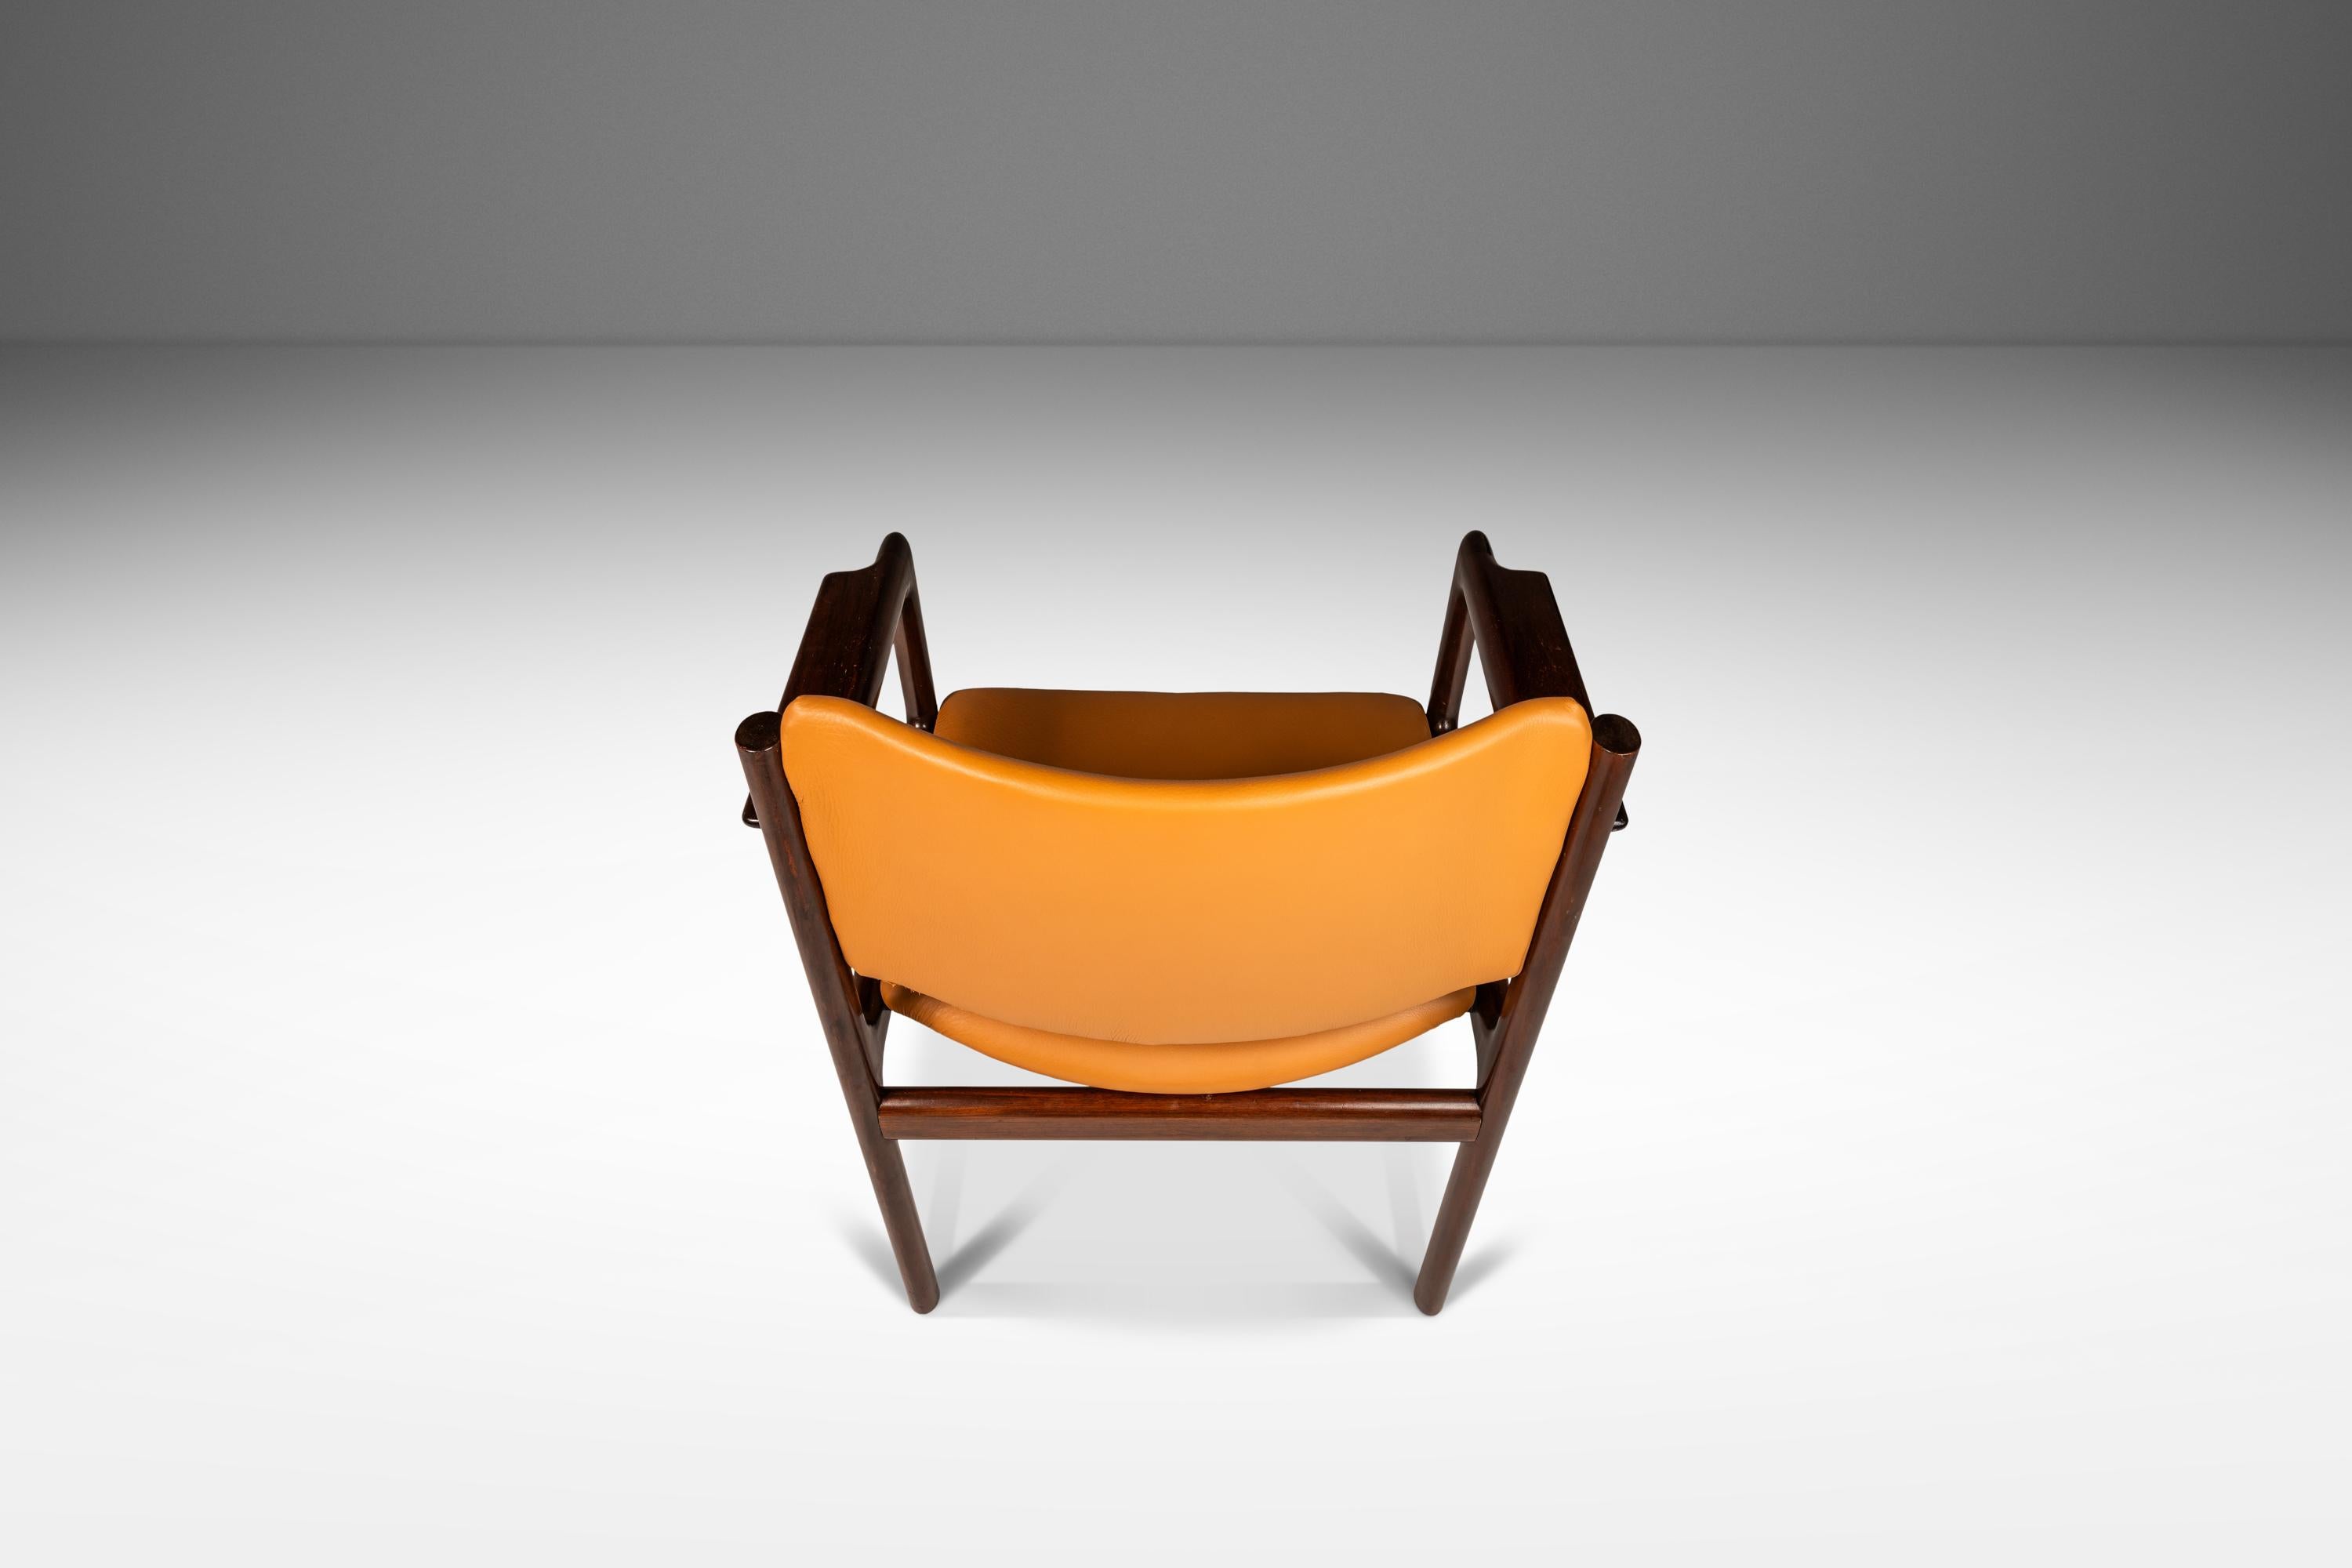 Philippine Danish Modern Mahogany & Leather Arm Chair, Danish Overseas Imports, c. 1960's For Sale